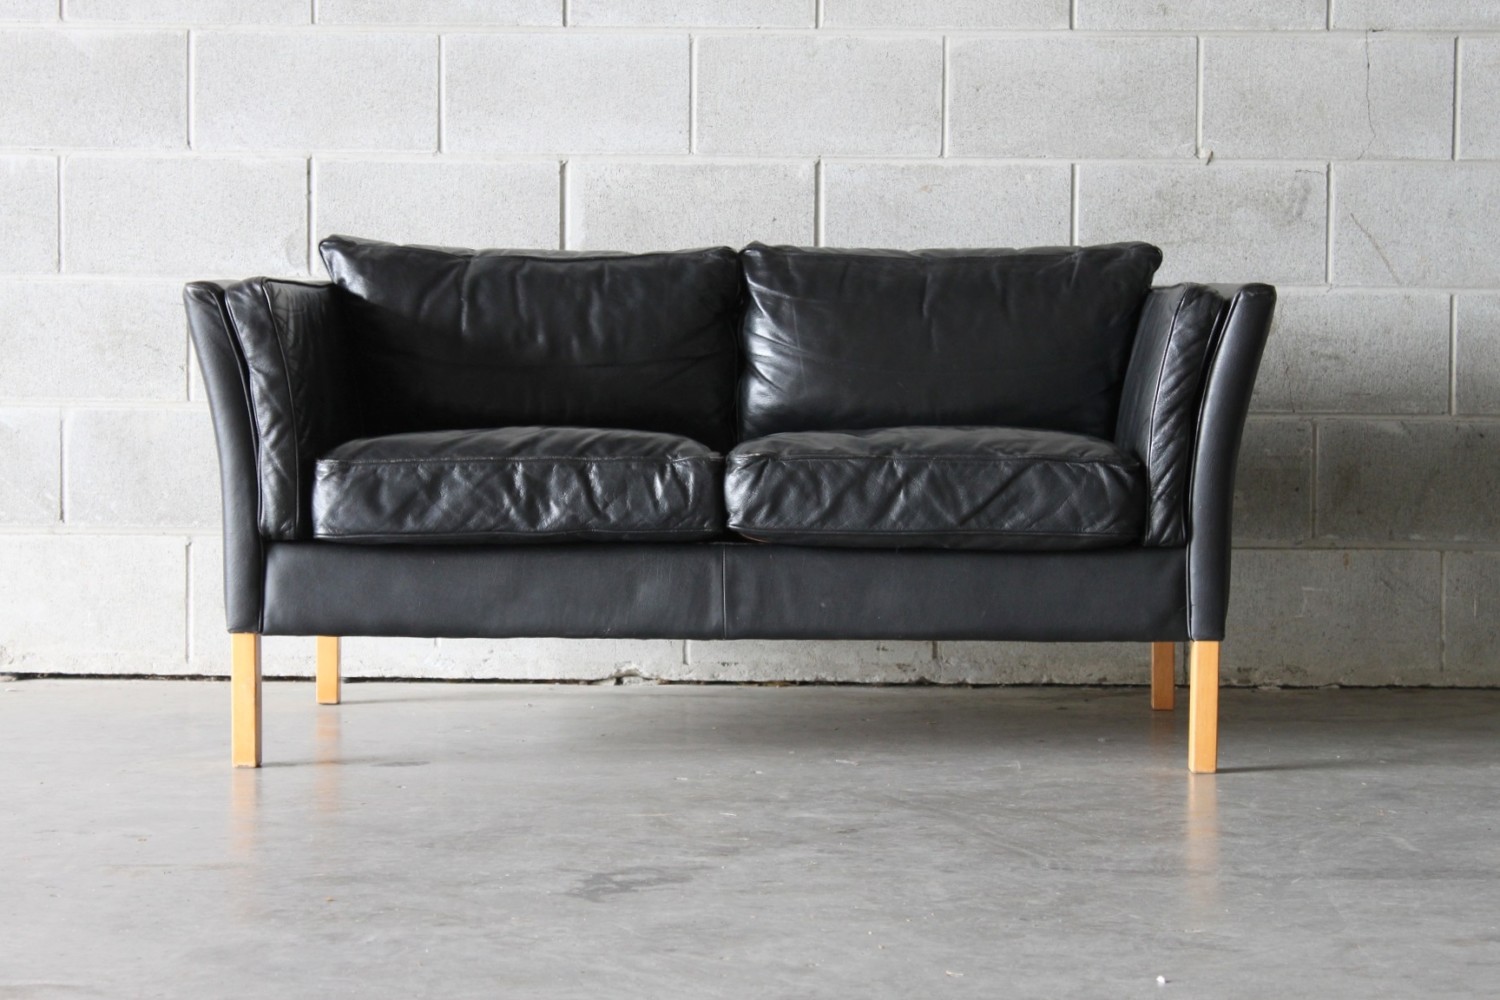 Pair of Black Leather Sofas